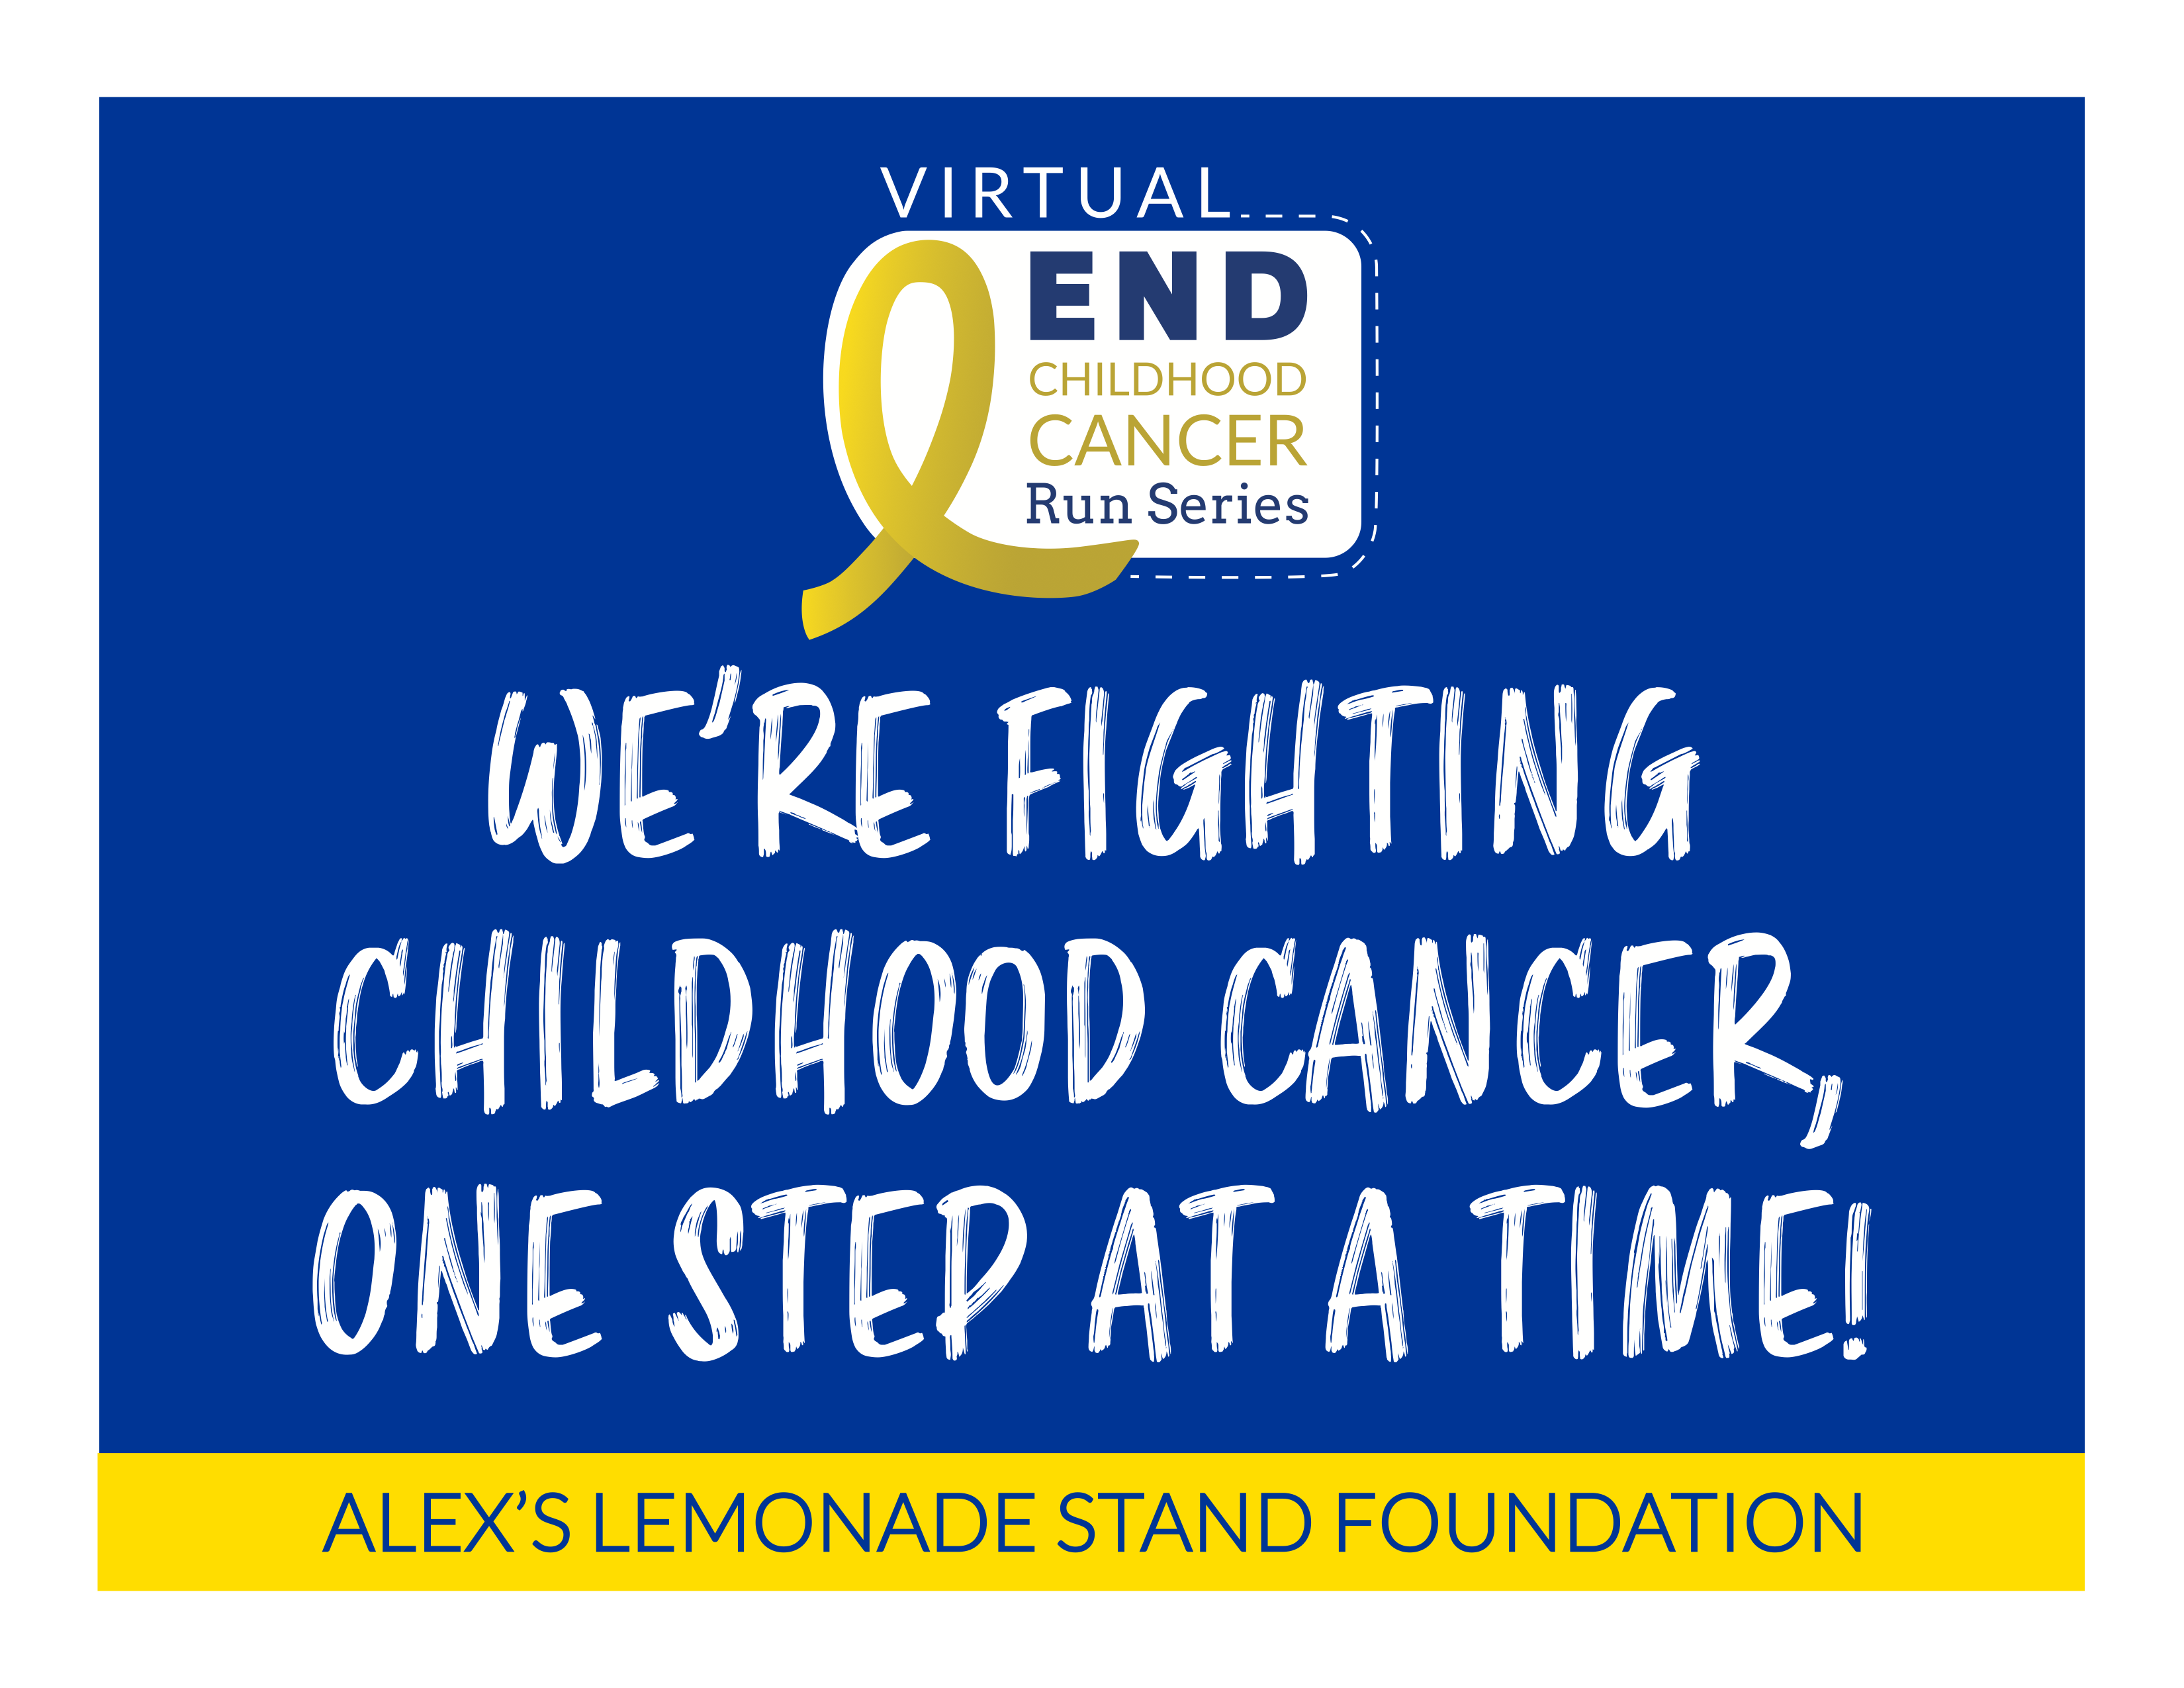 Virtual End Childhood Cancer Run Series Cheer Sign 4